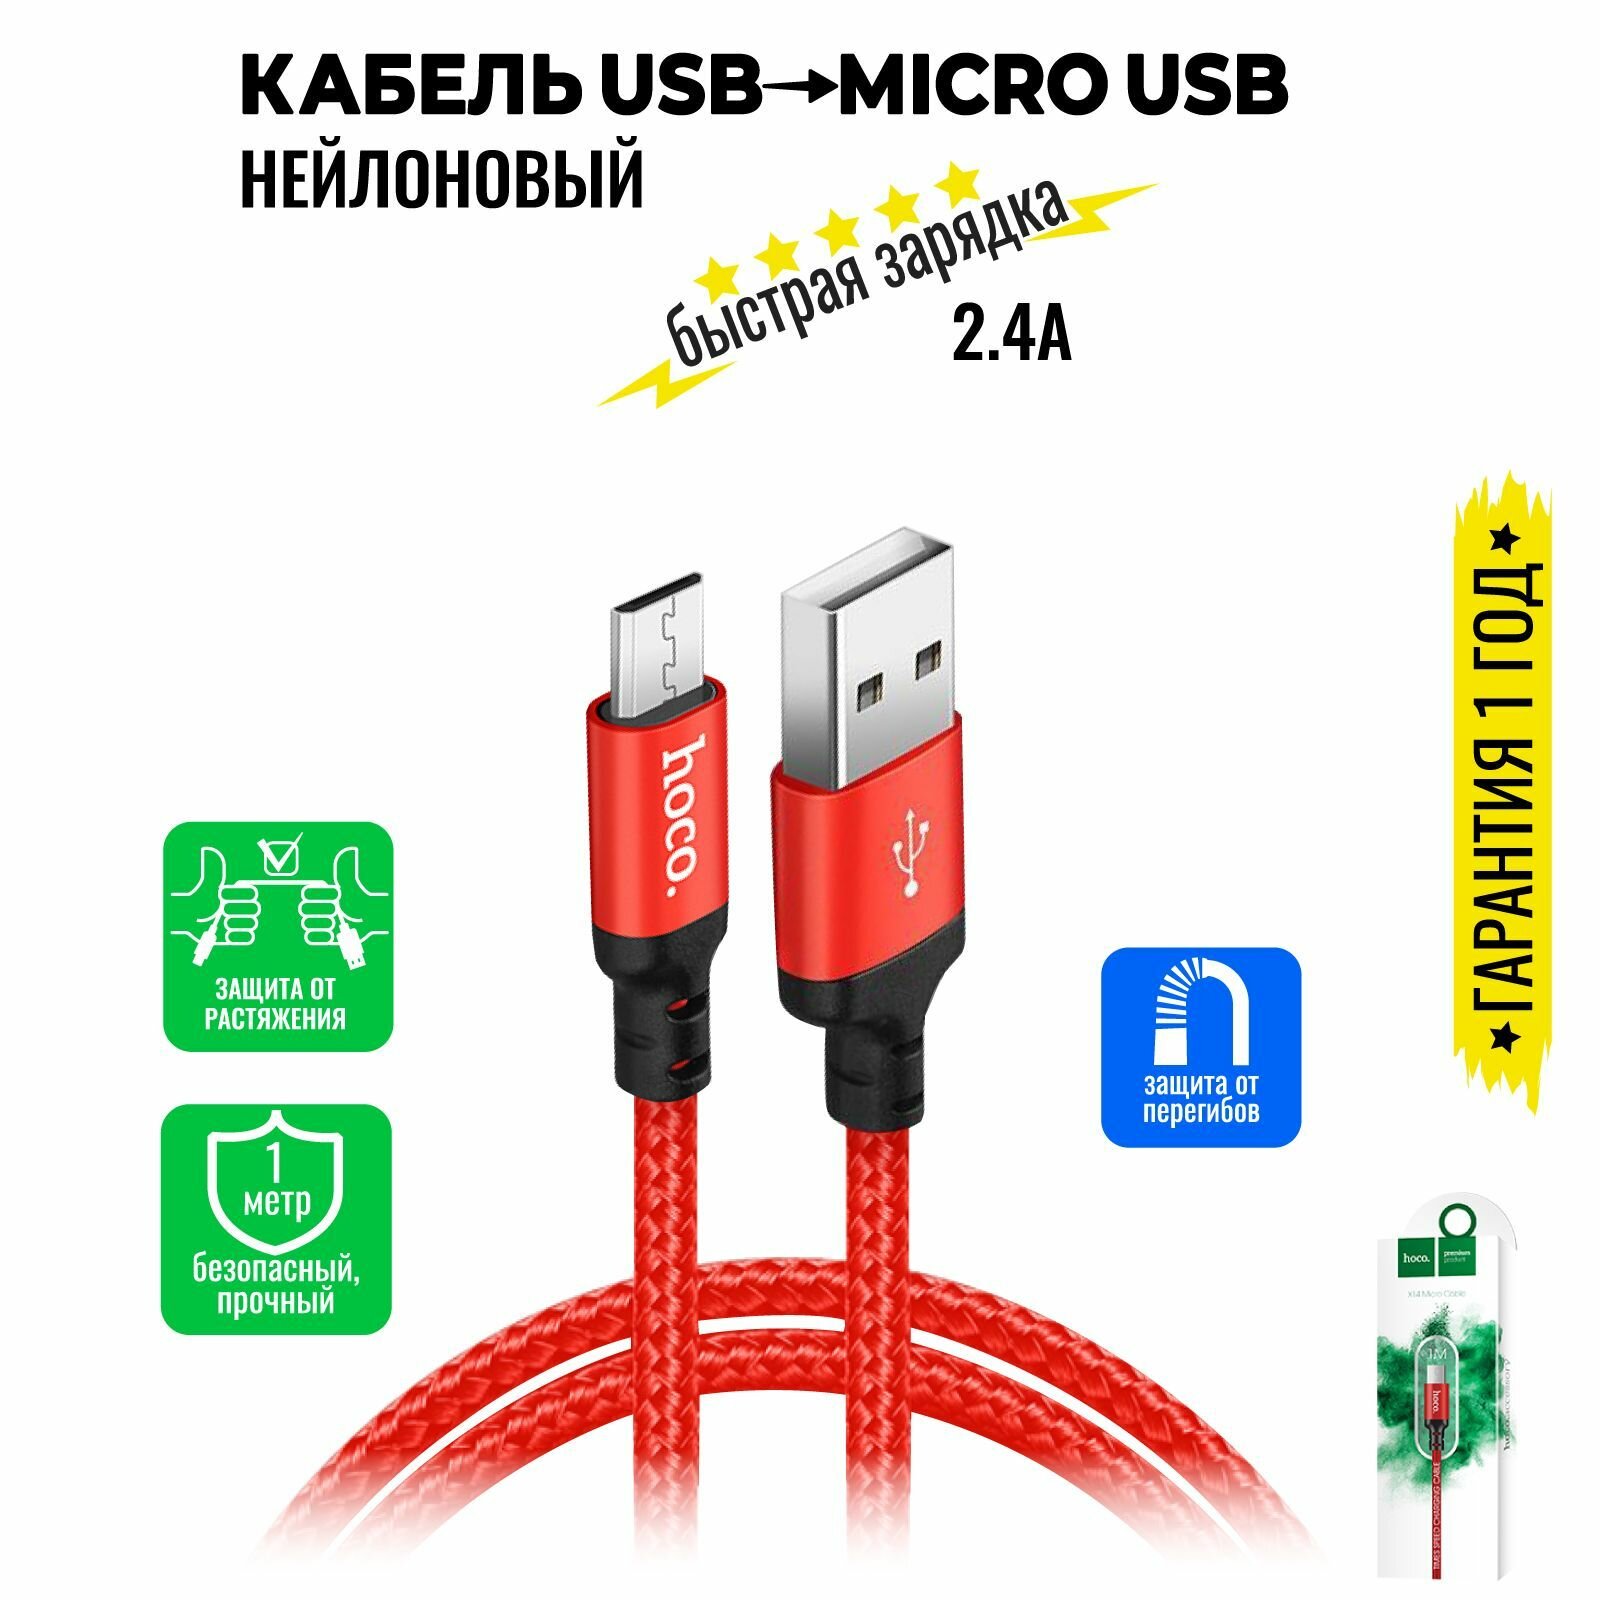 Кабель Micro USB, быстрая зарядка, 1 метр, нейлоновый, передача данных / шнур для телефона микро юсб для Android / Провод для андройд / Hoco. X14